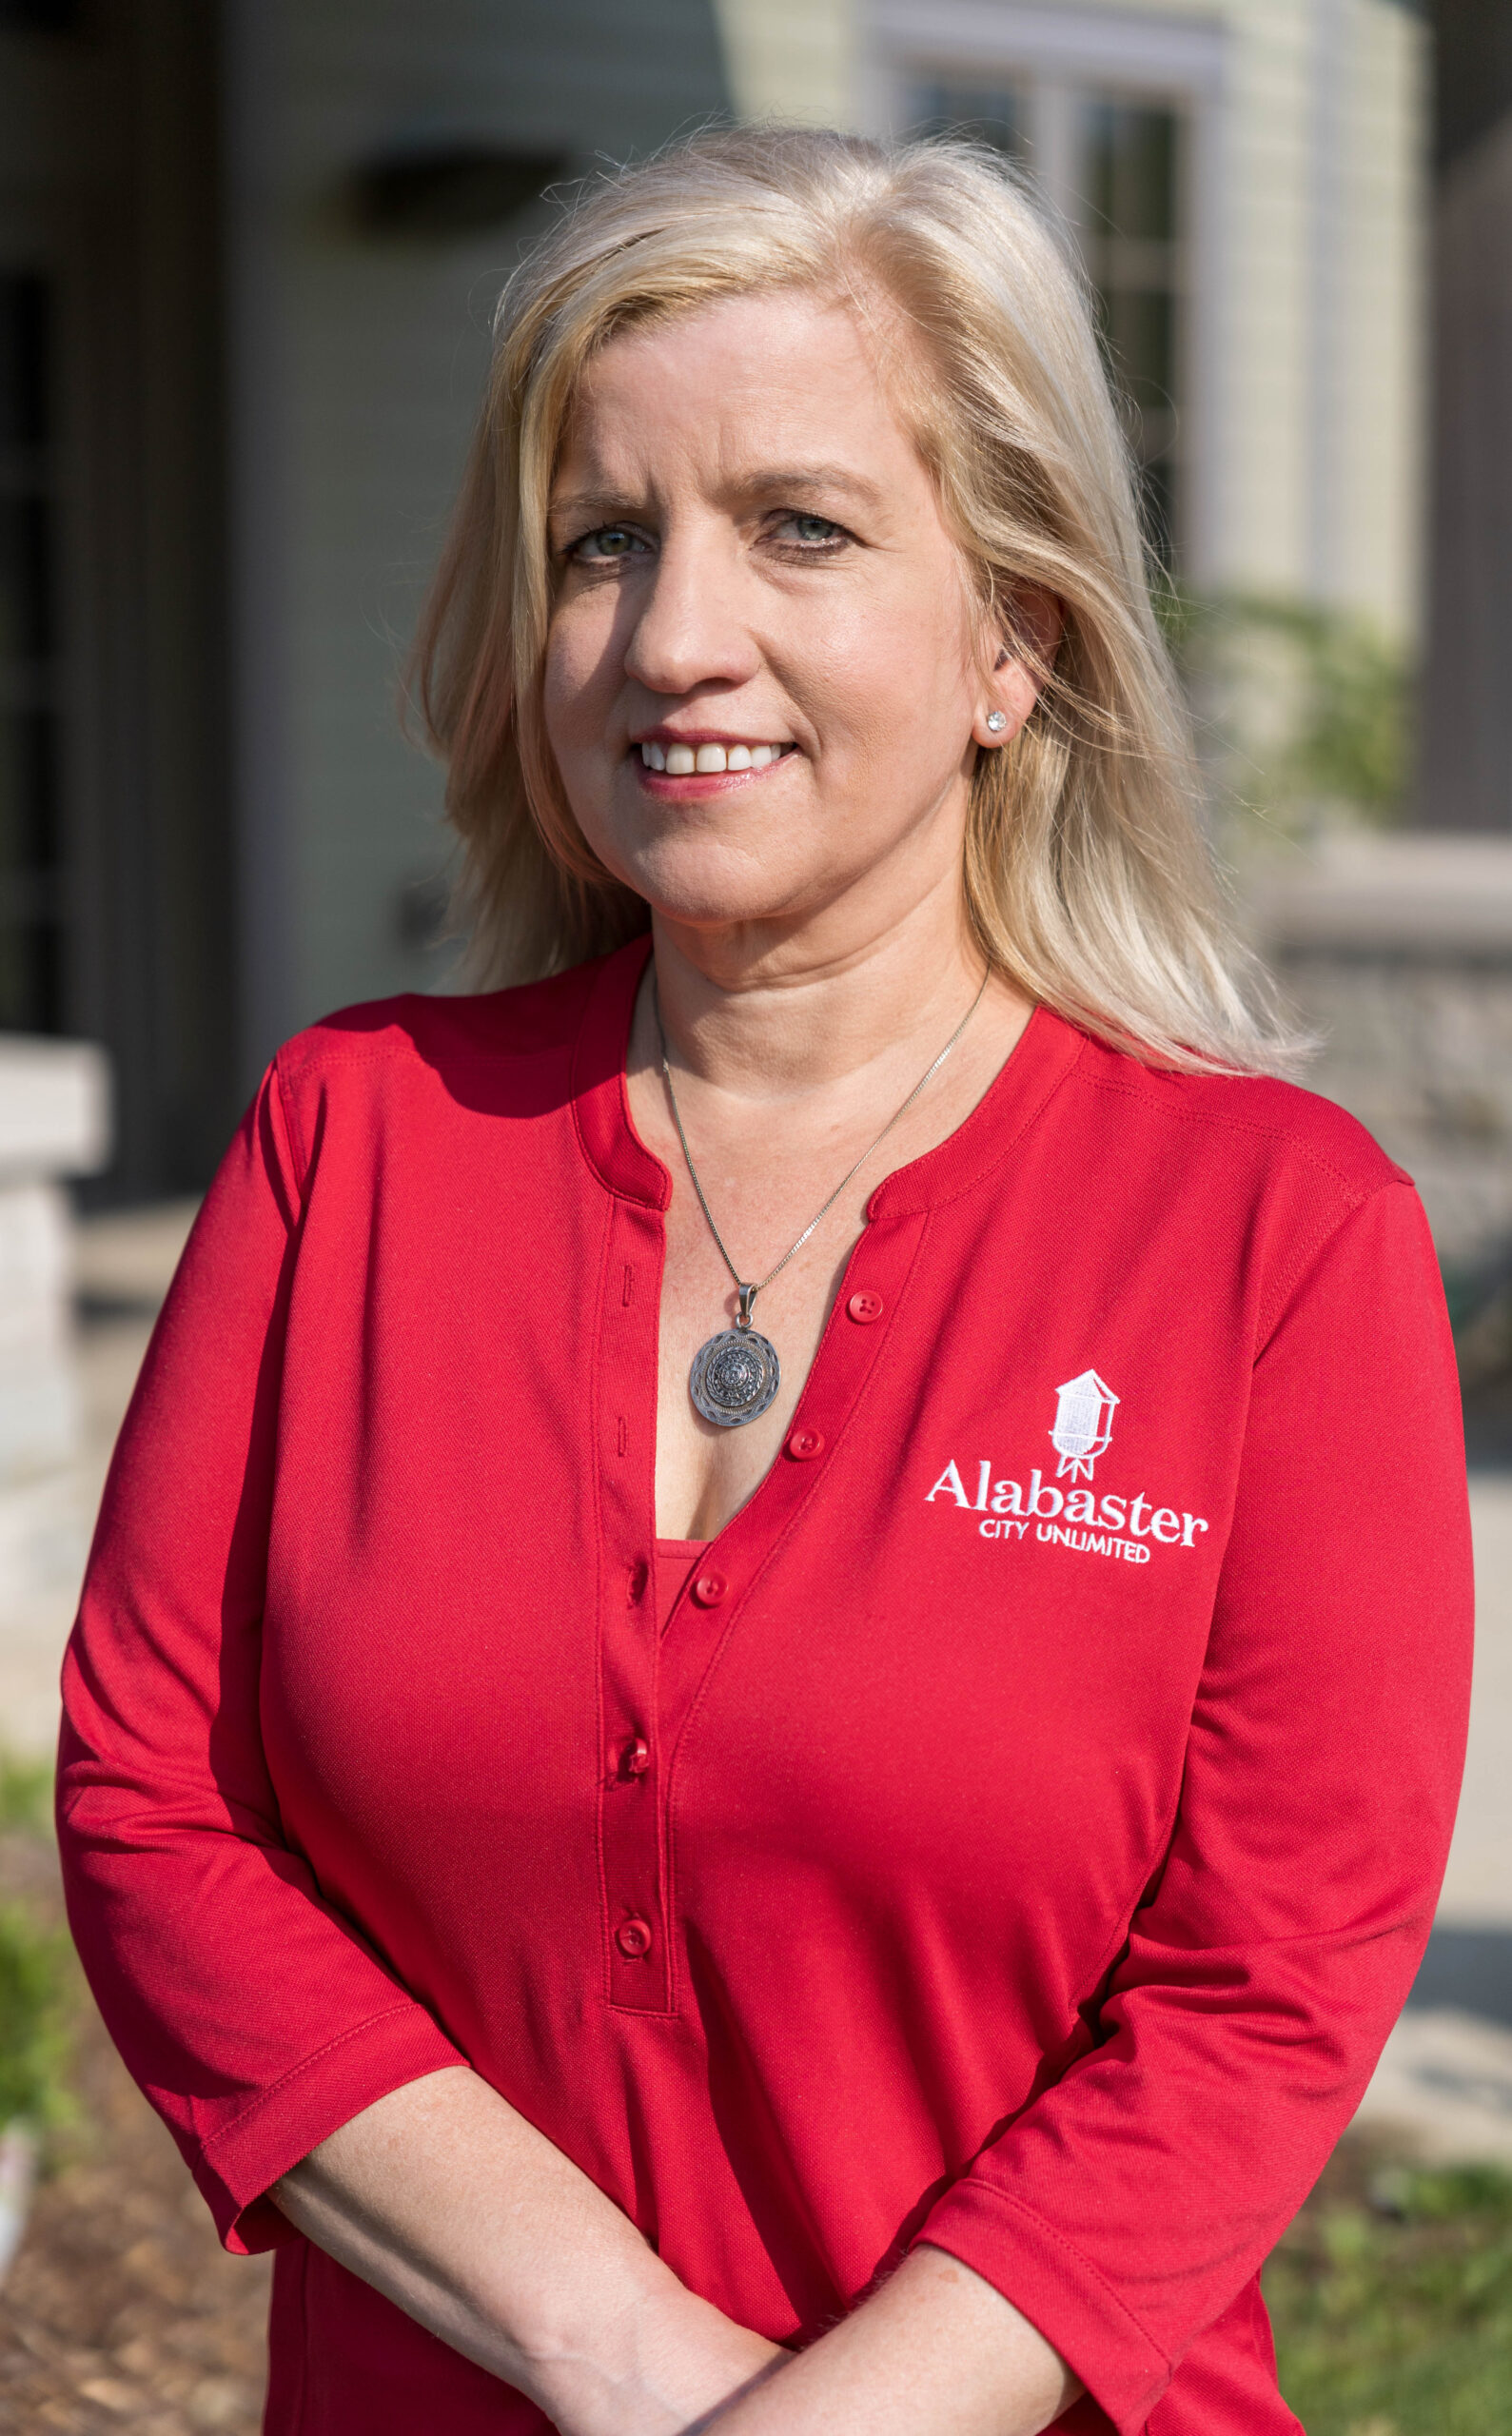 Meet Alabaster Senior Center Manager Stacy Payton